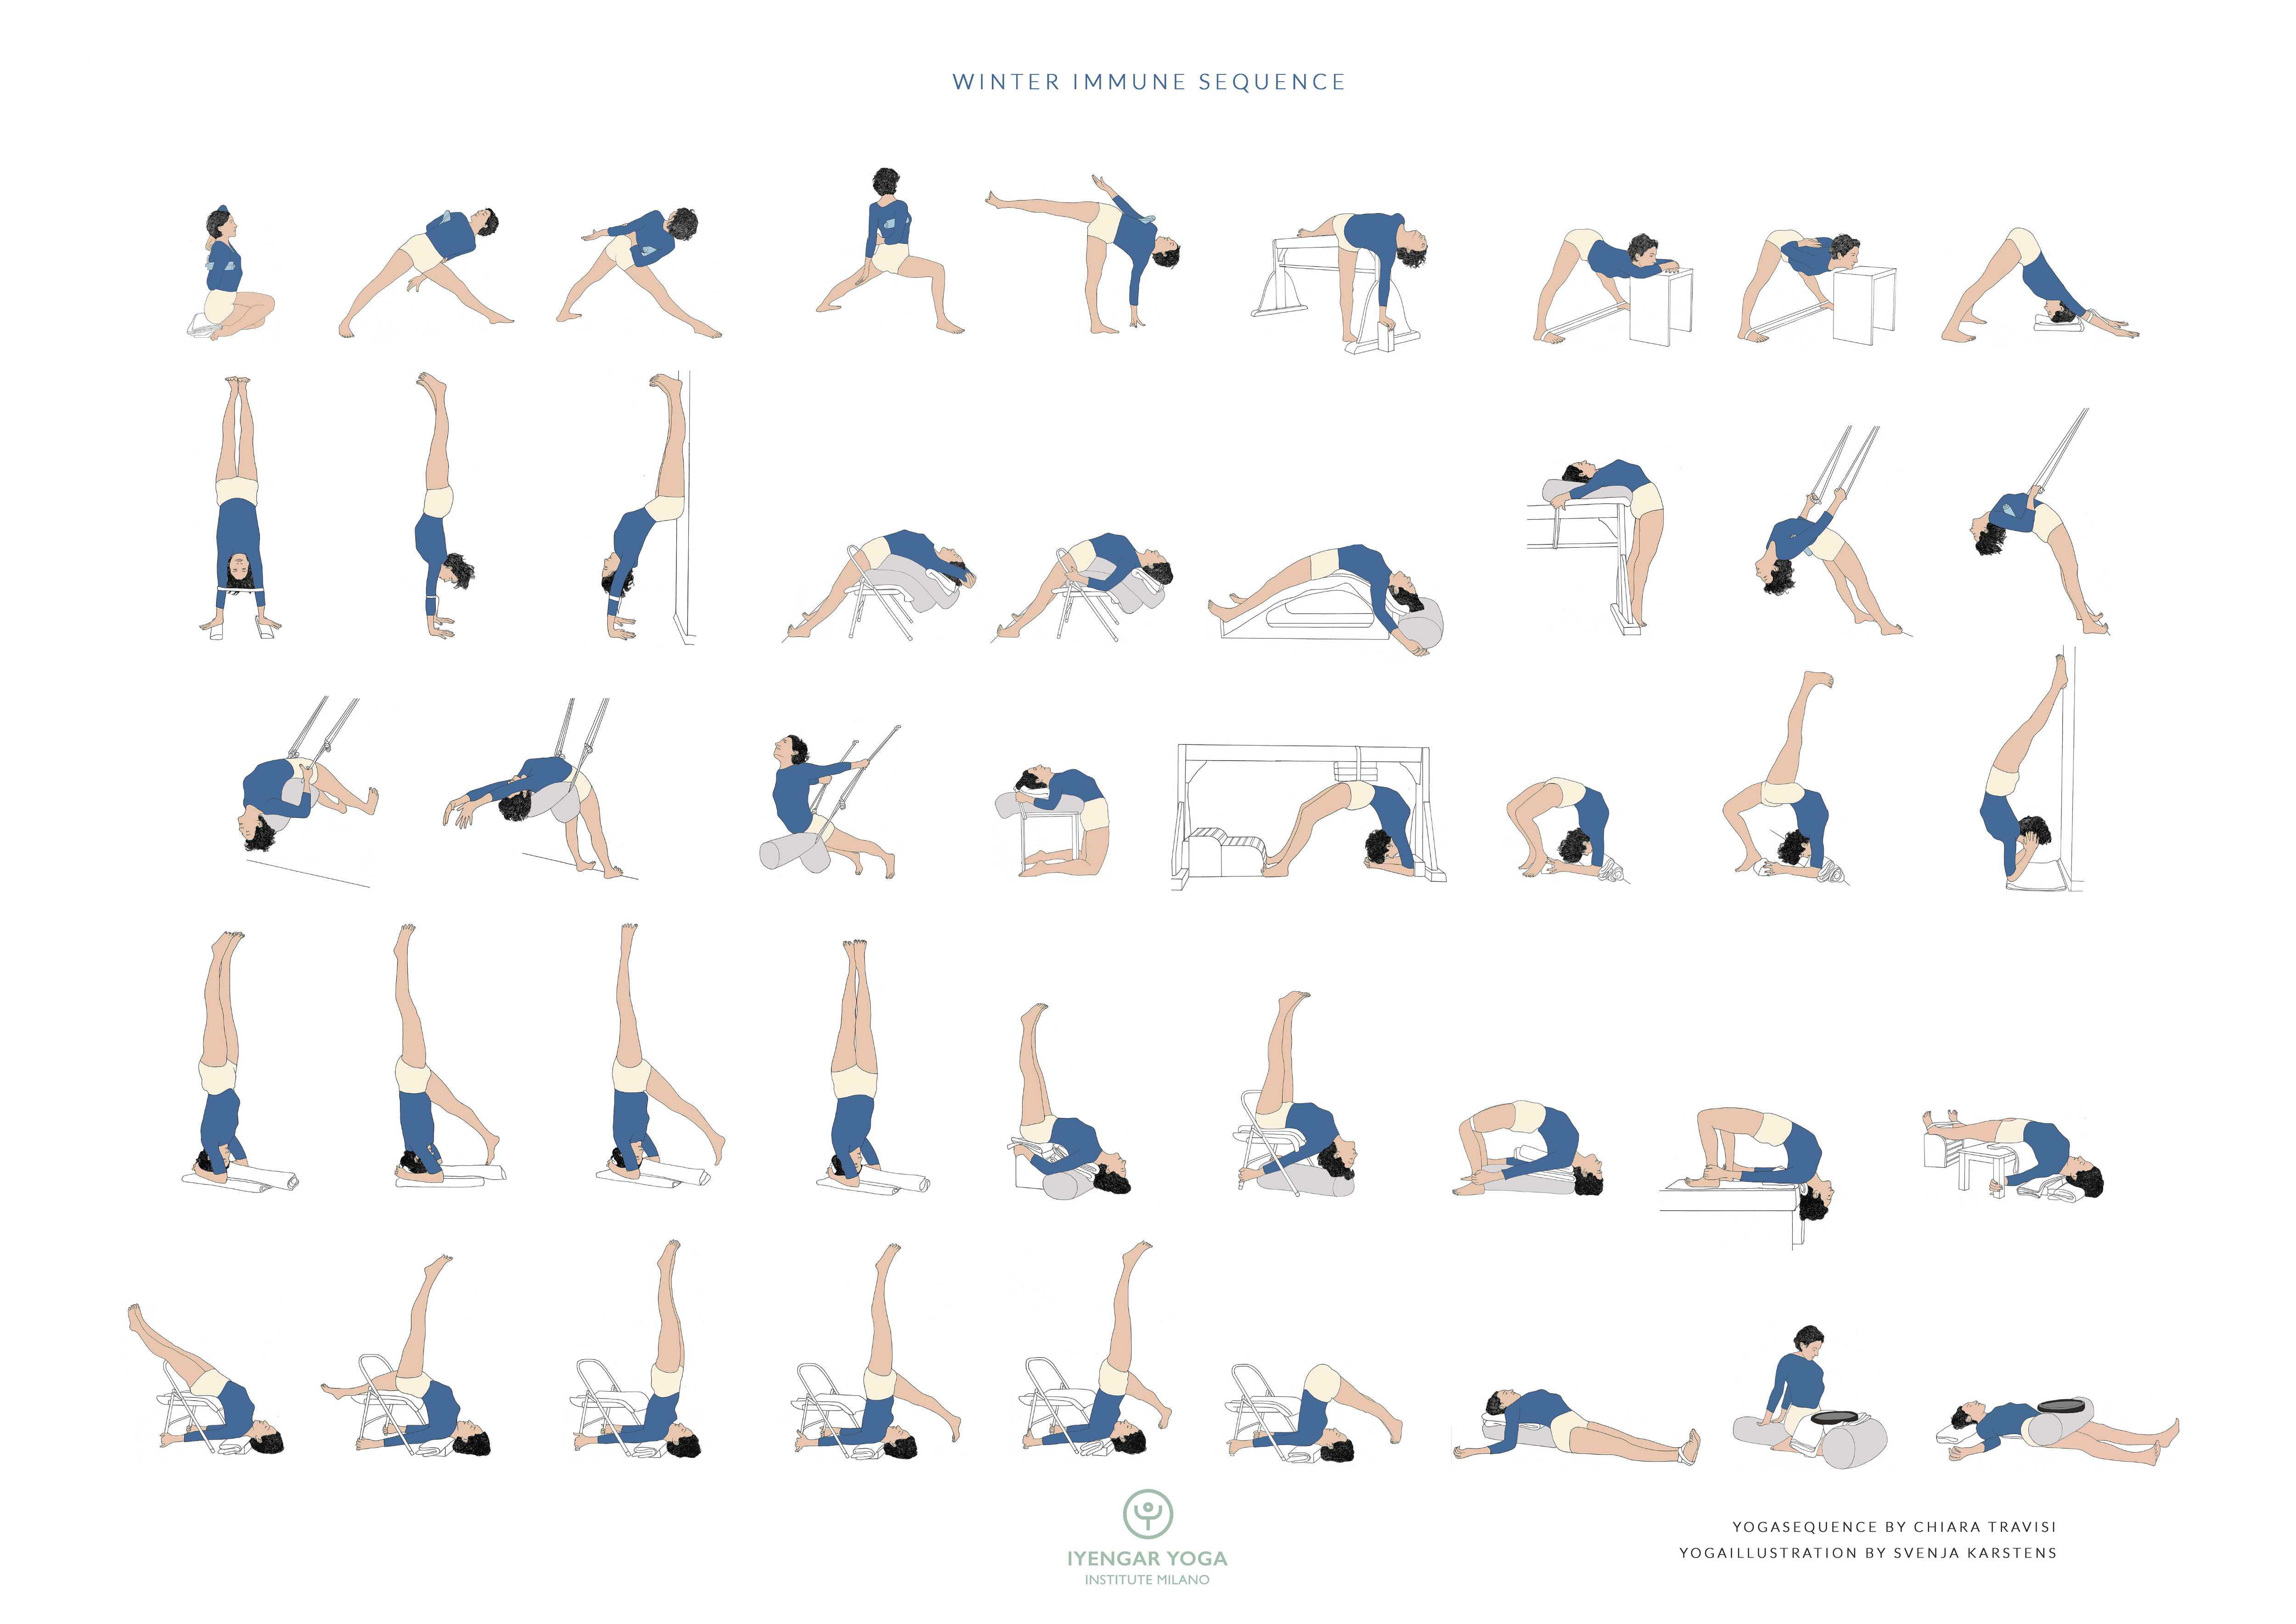 Chakra Yoga Poses FREE Printables - Your Blissful Self